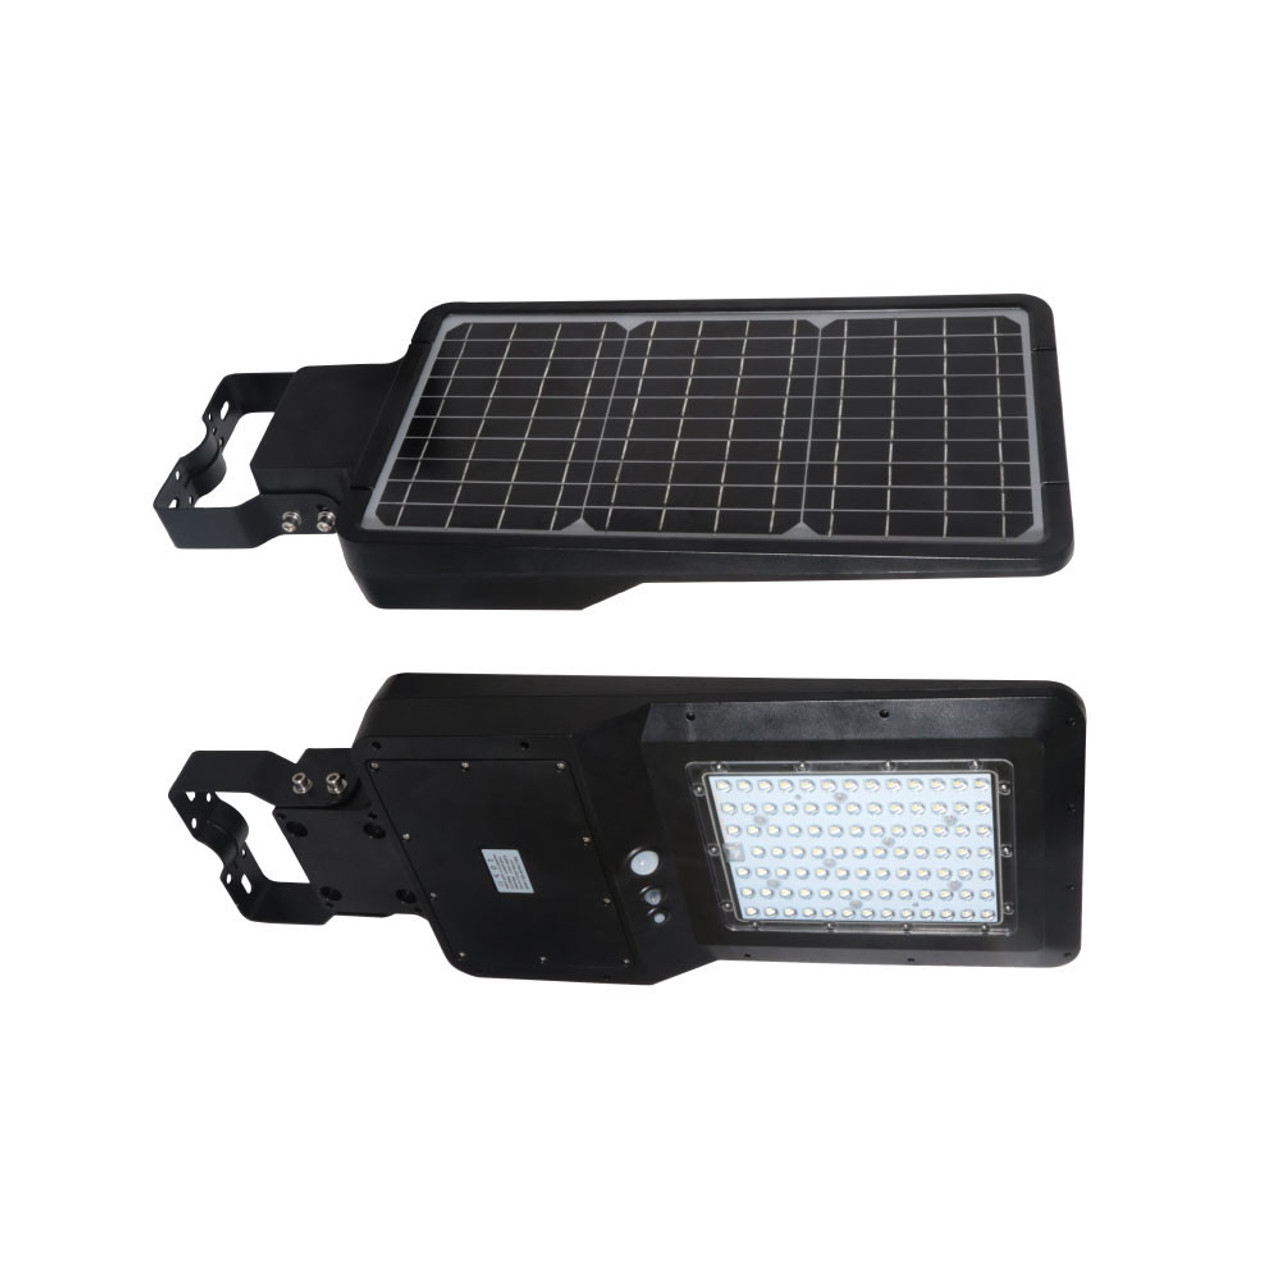 Best Solar LED Parking Lot or Street Light - Dusk to Dawn - 40 Watt 4800 Lumens - Programmable Remote